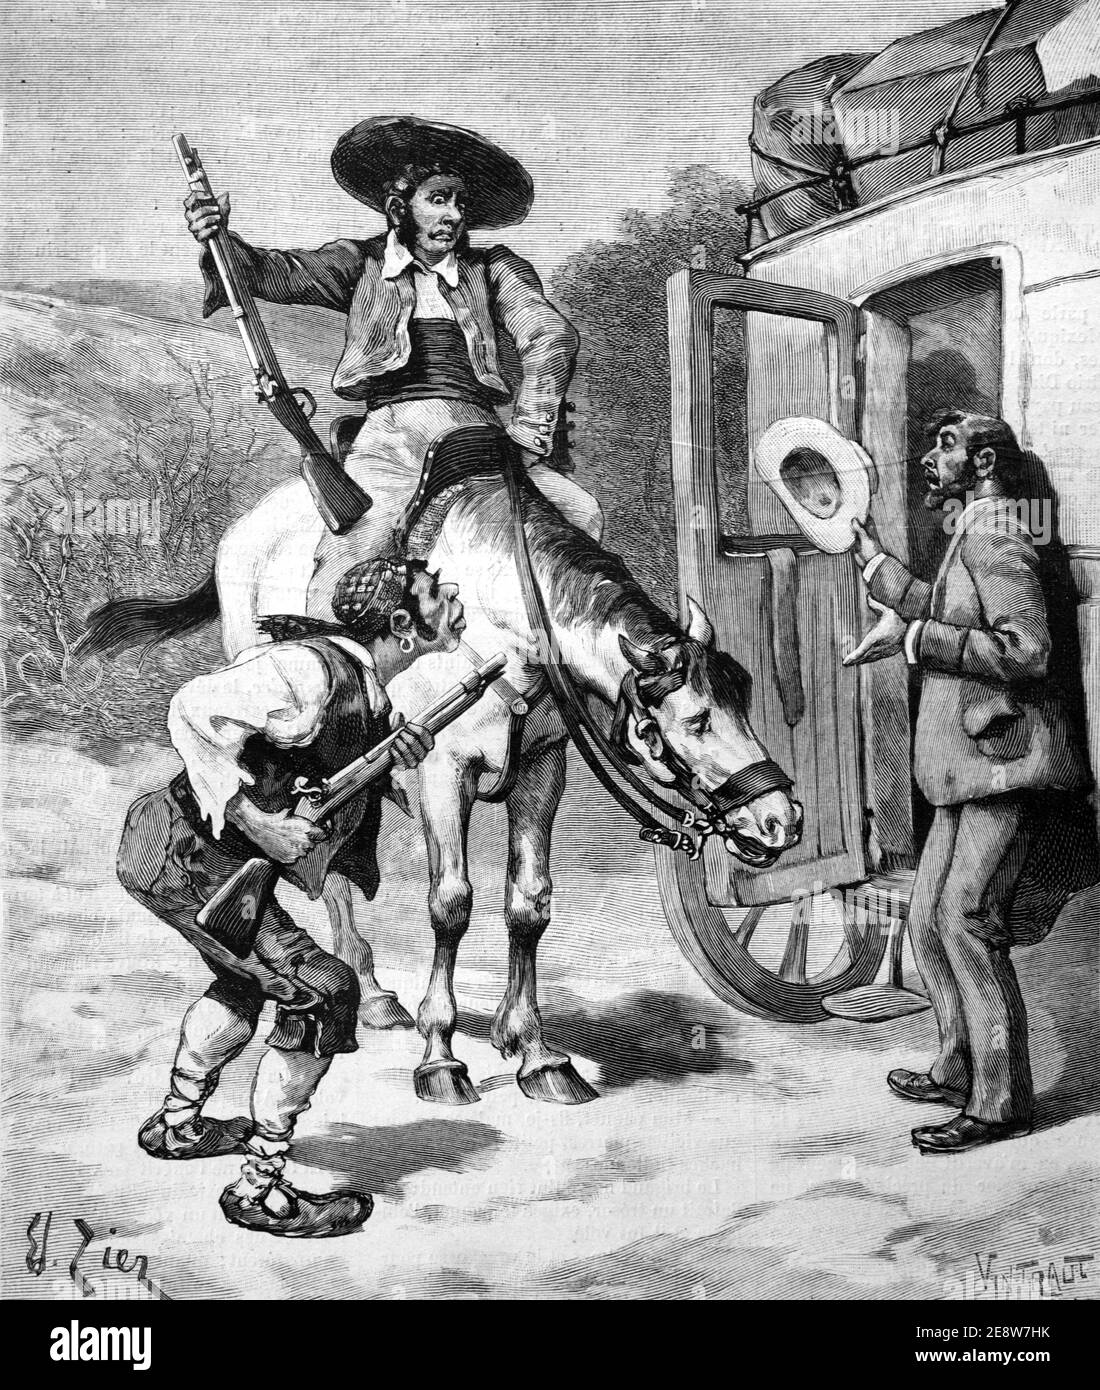 Mexican Bandits Brigands Salteadores or Highwaymen Mexico 1901 Vintage Illustration or Engraving Stock Photo